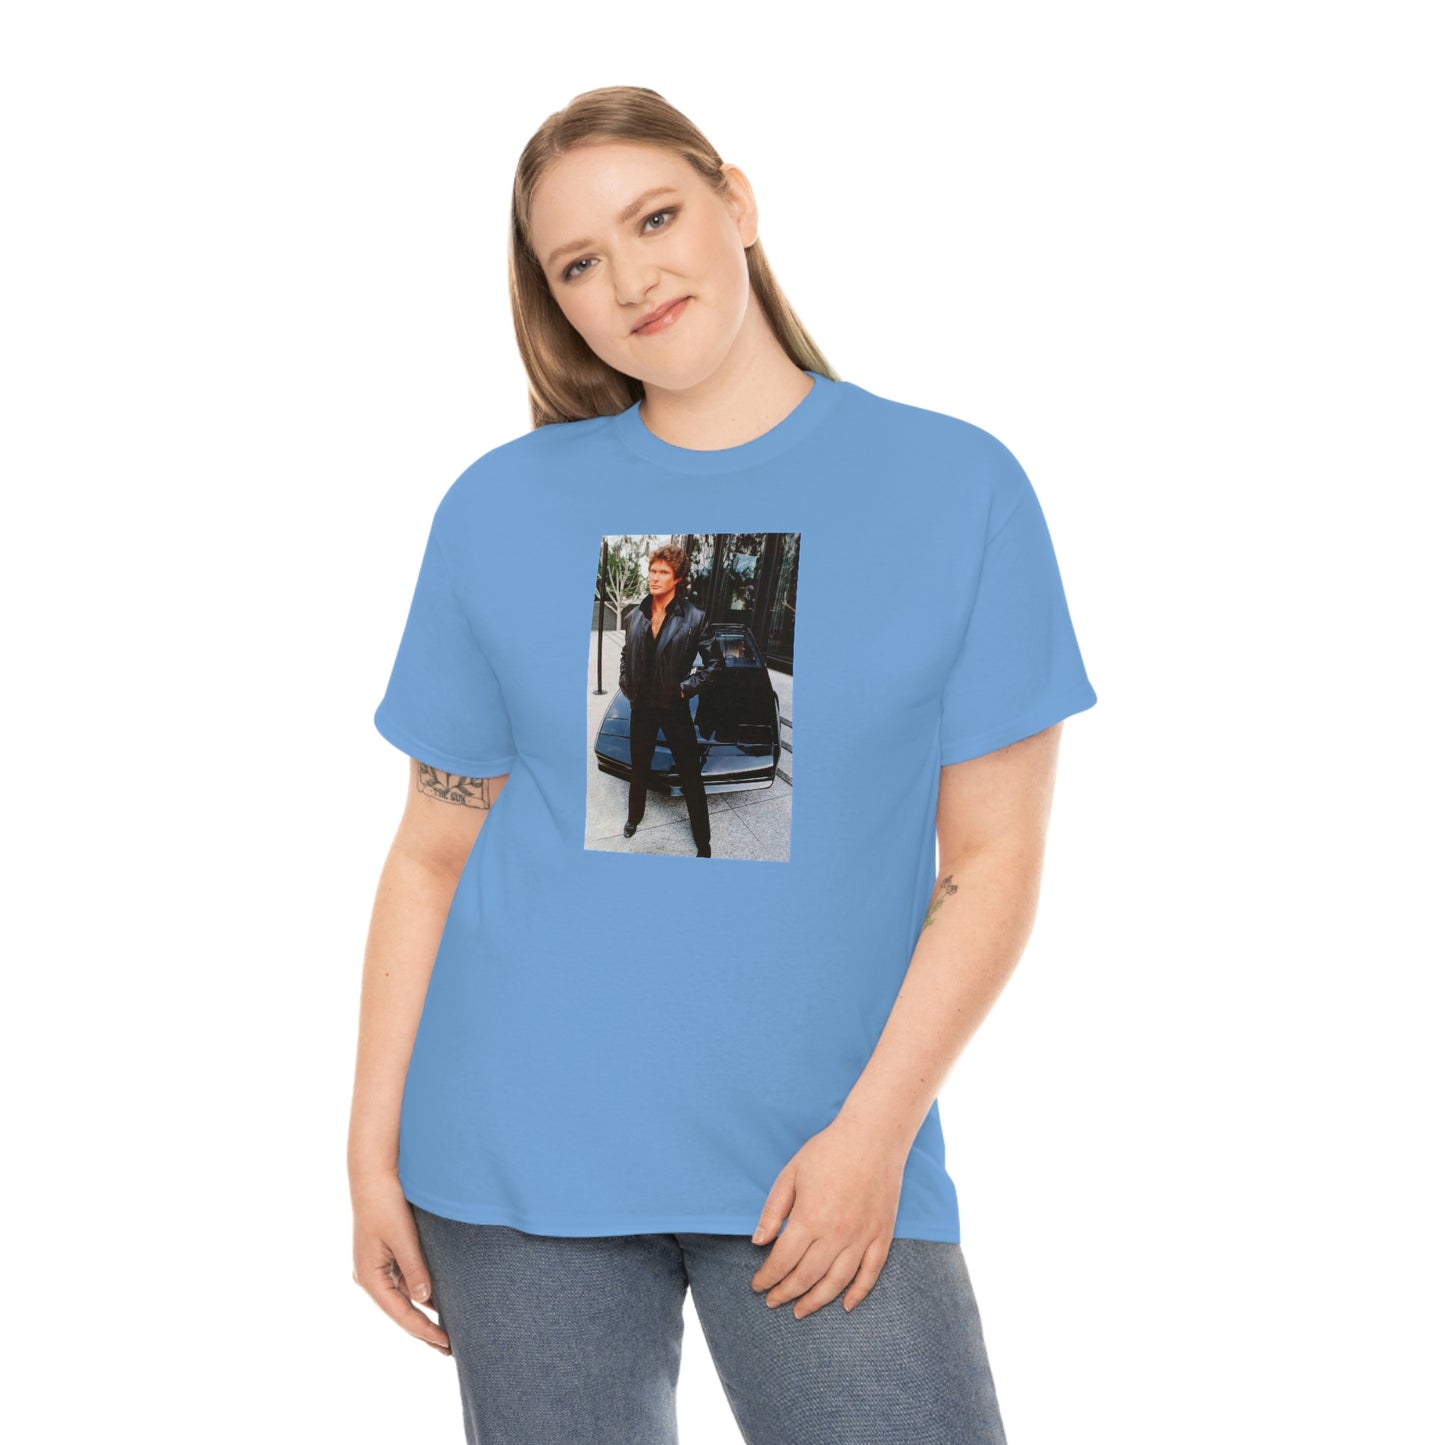 Knite Rider T-Shirt